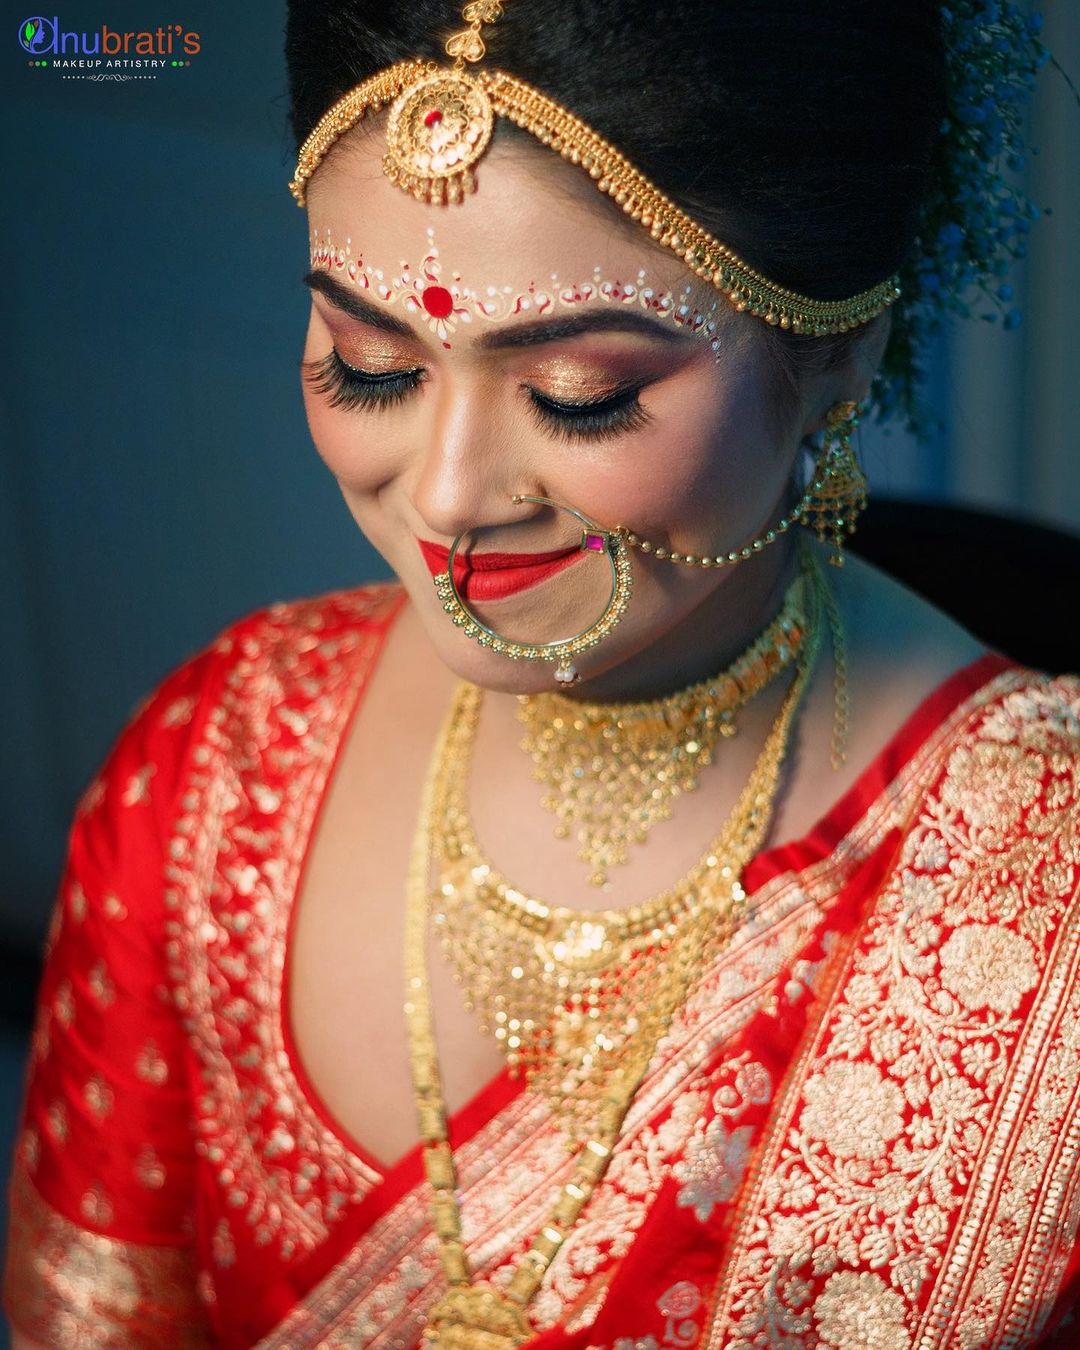 Pin by SG on Brides  Bridal makeup images Bridal hairstyle indian wedding  Bengali bridal makeup